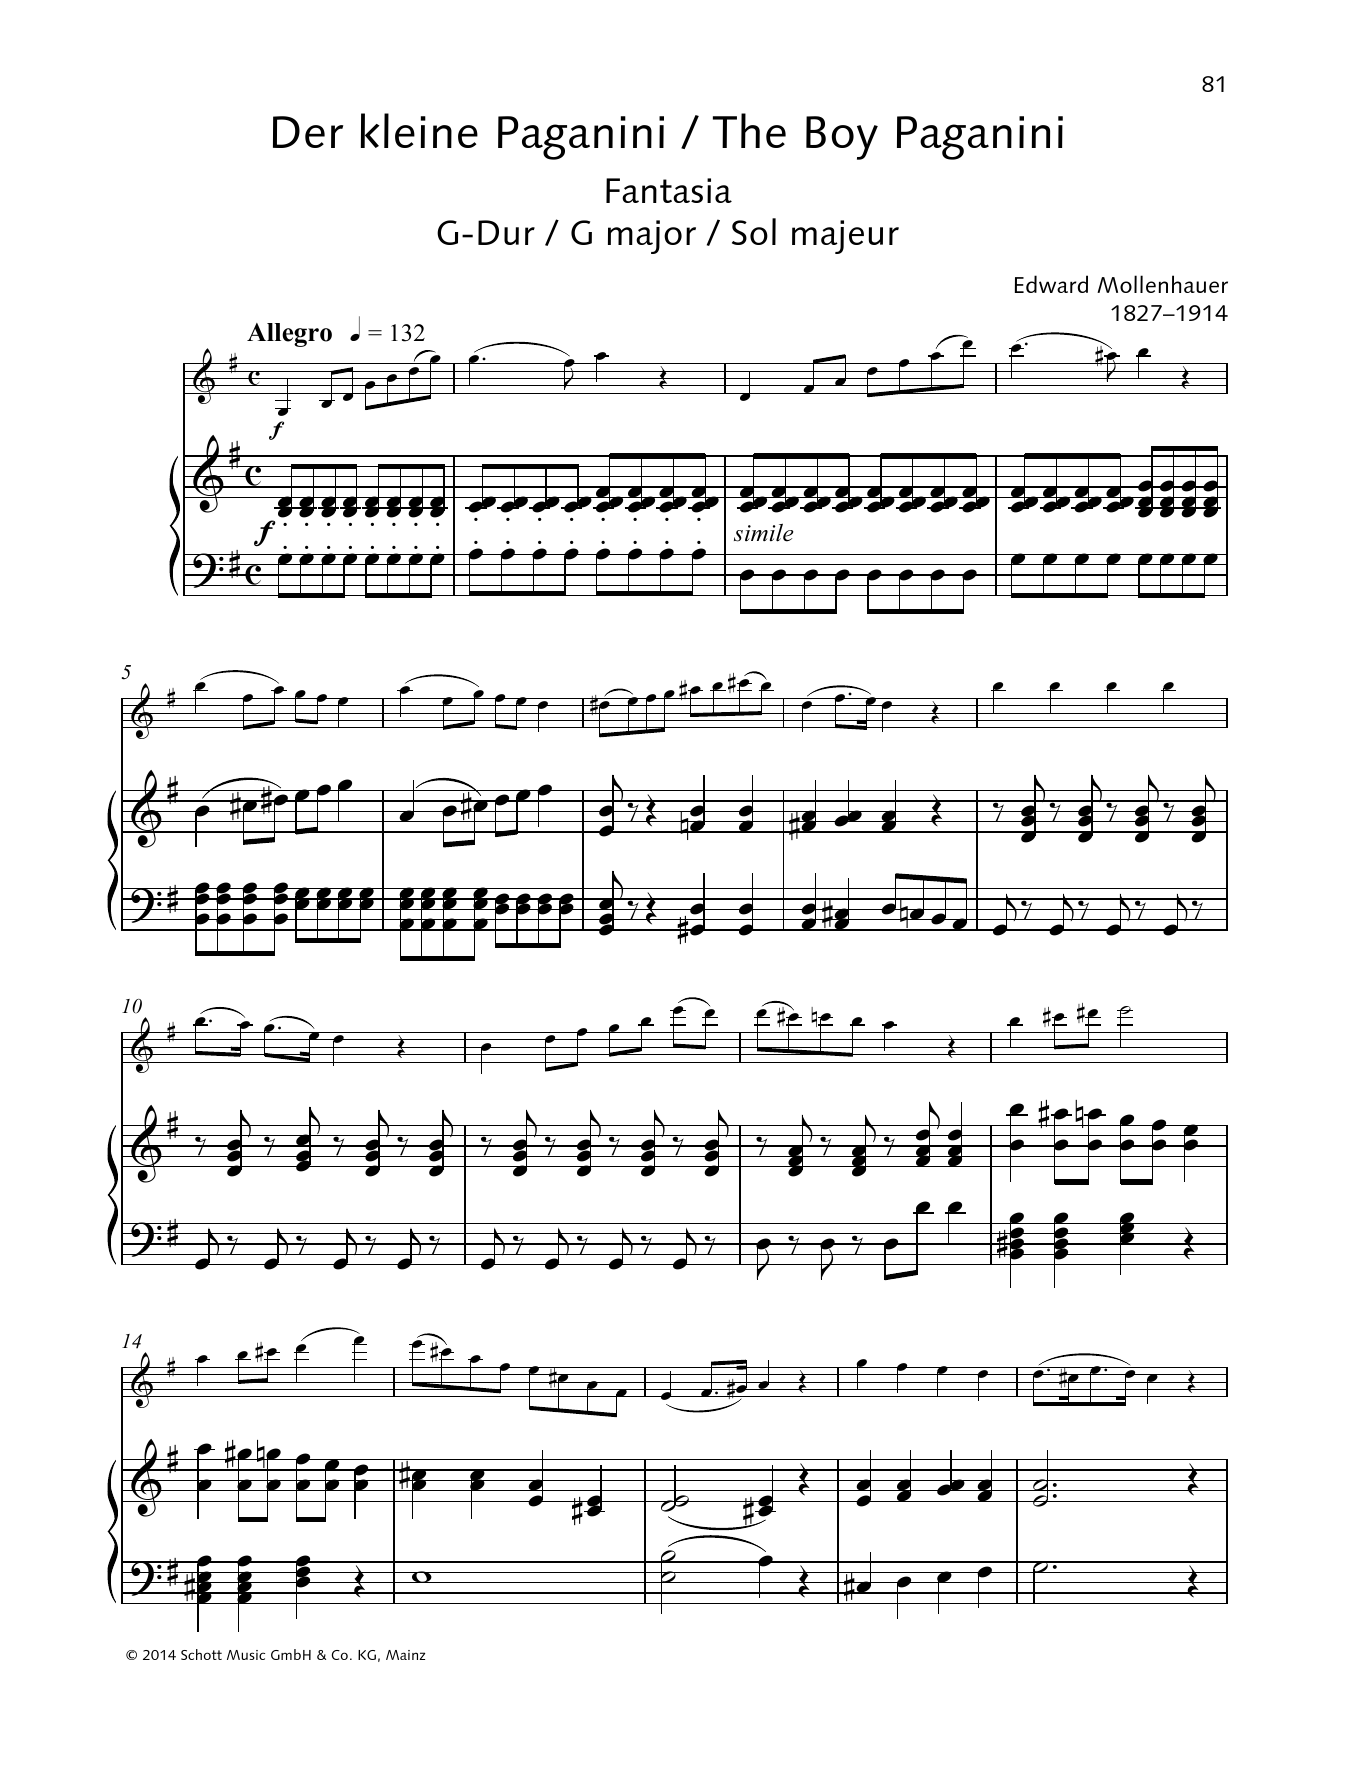 Download Edward Mollenhauer The Boy Paganini Sheet Music